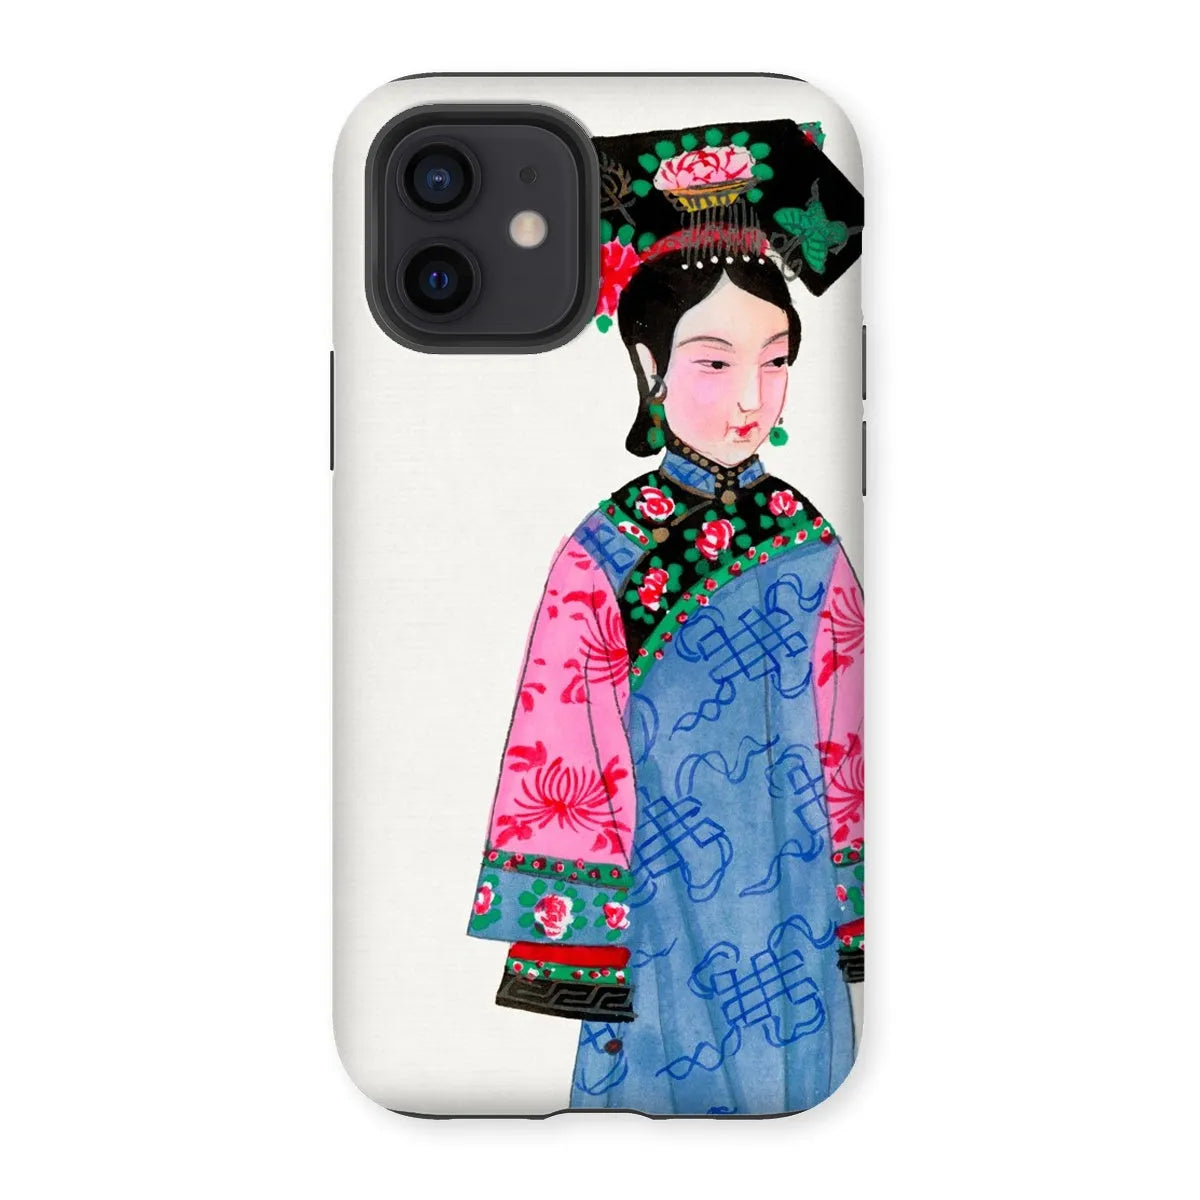 Noblewoman Too - Manchu Aesthetic Art Phone Case - Iphone 12 / Matte - Mobile Phone Cases - Aesthetic Art